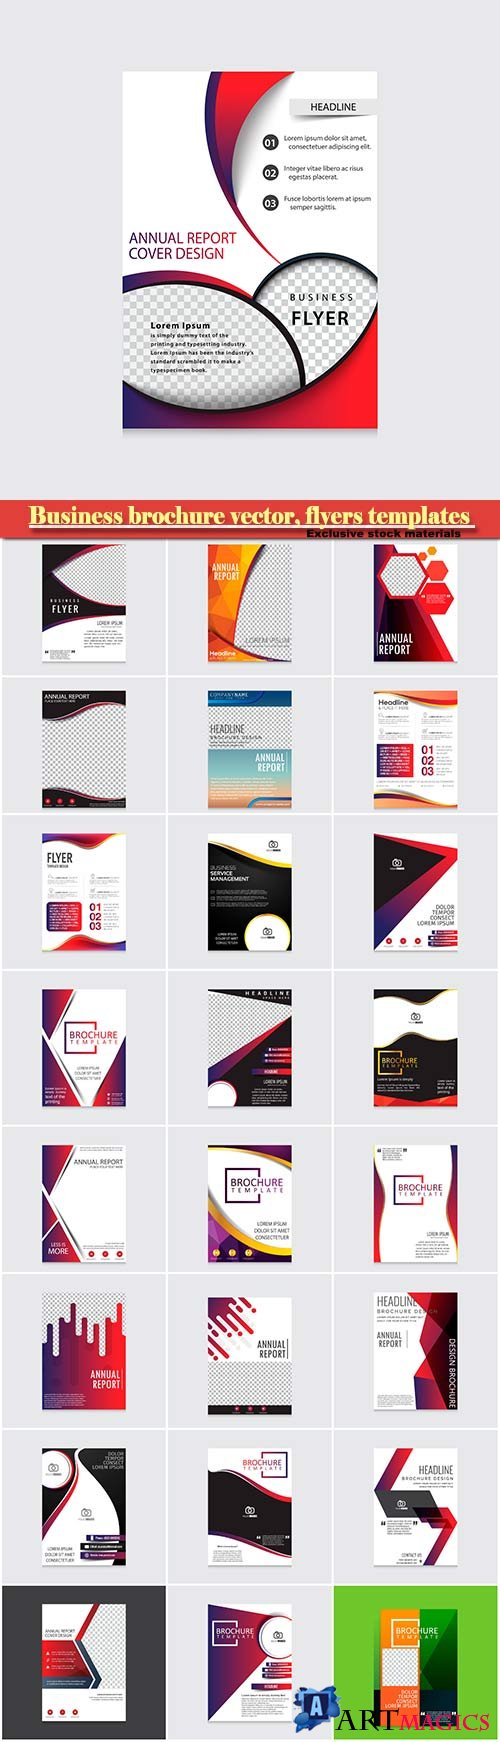 Business brochure vector, flyers templates # 35